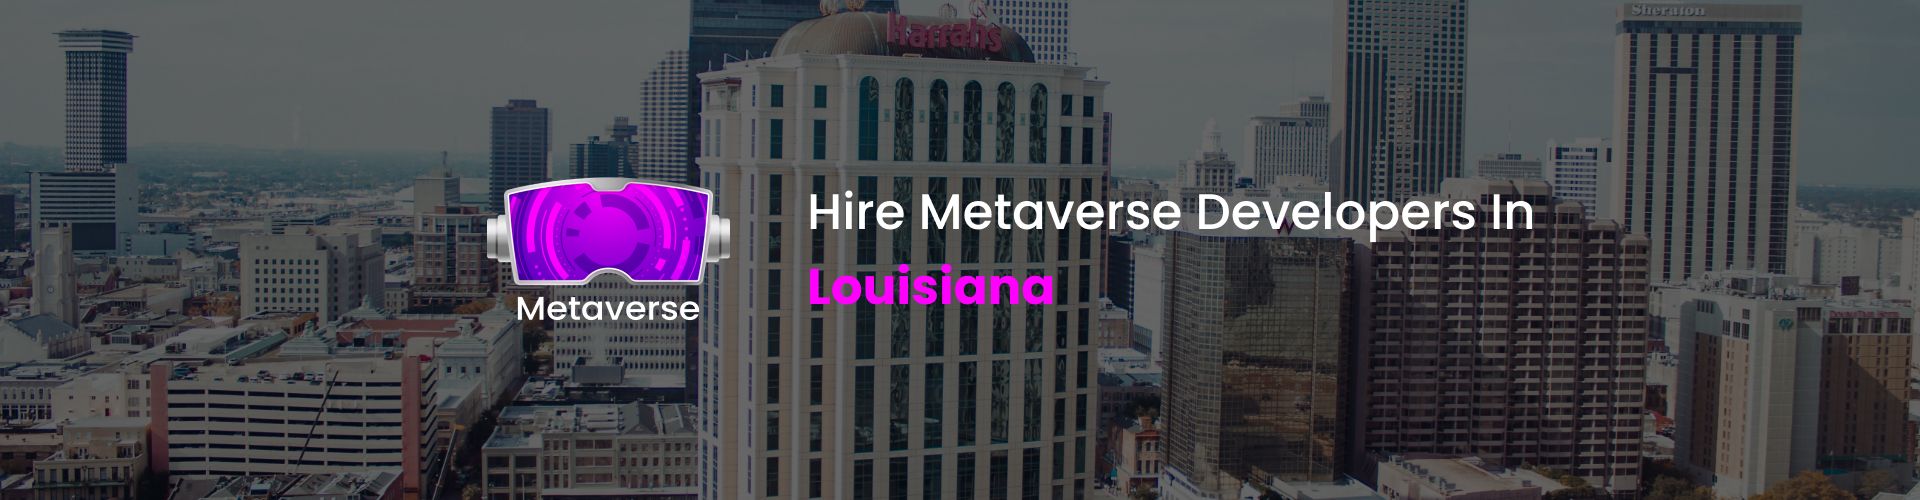 hire metaverse developers in louisiana